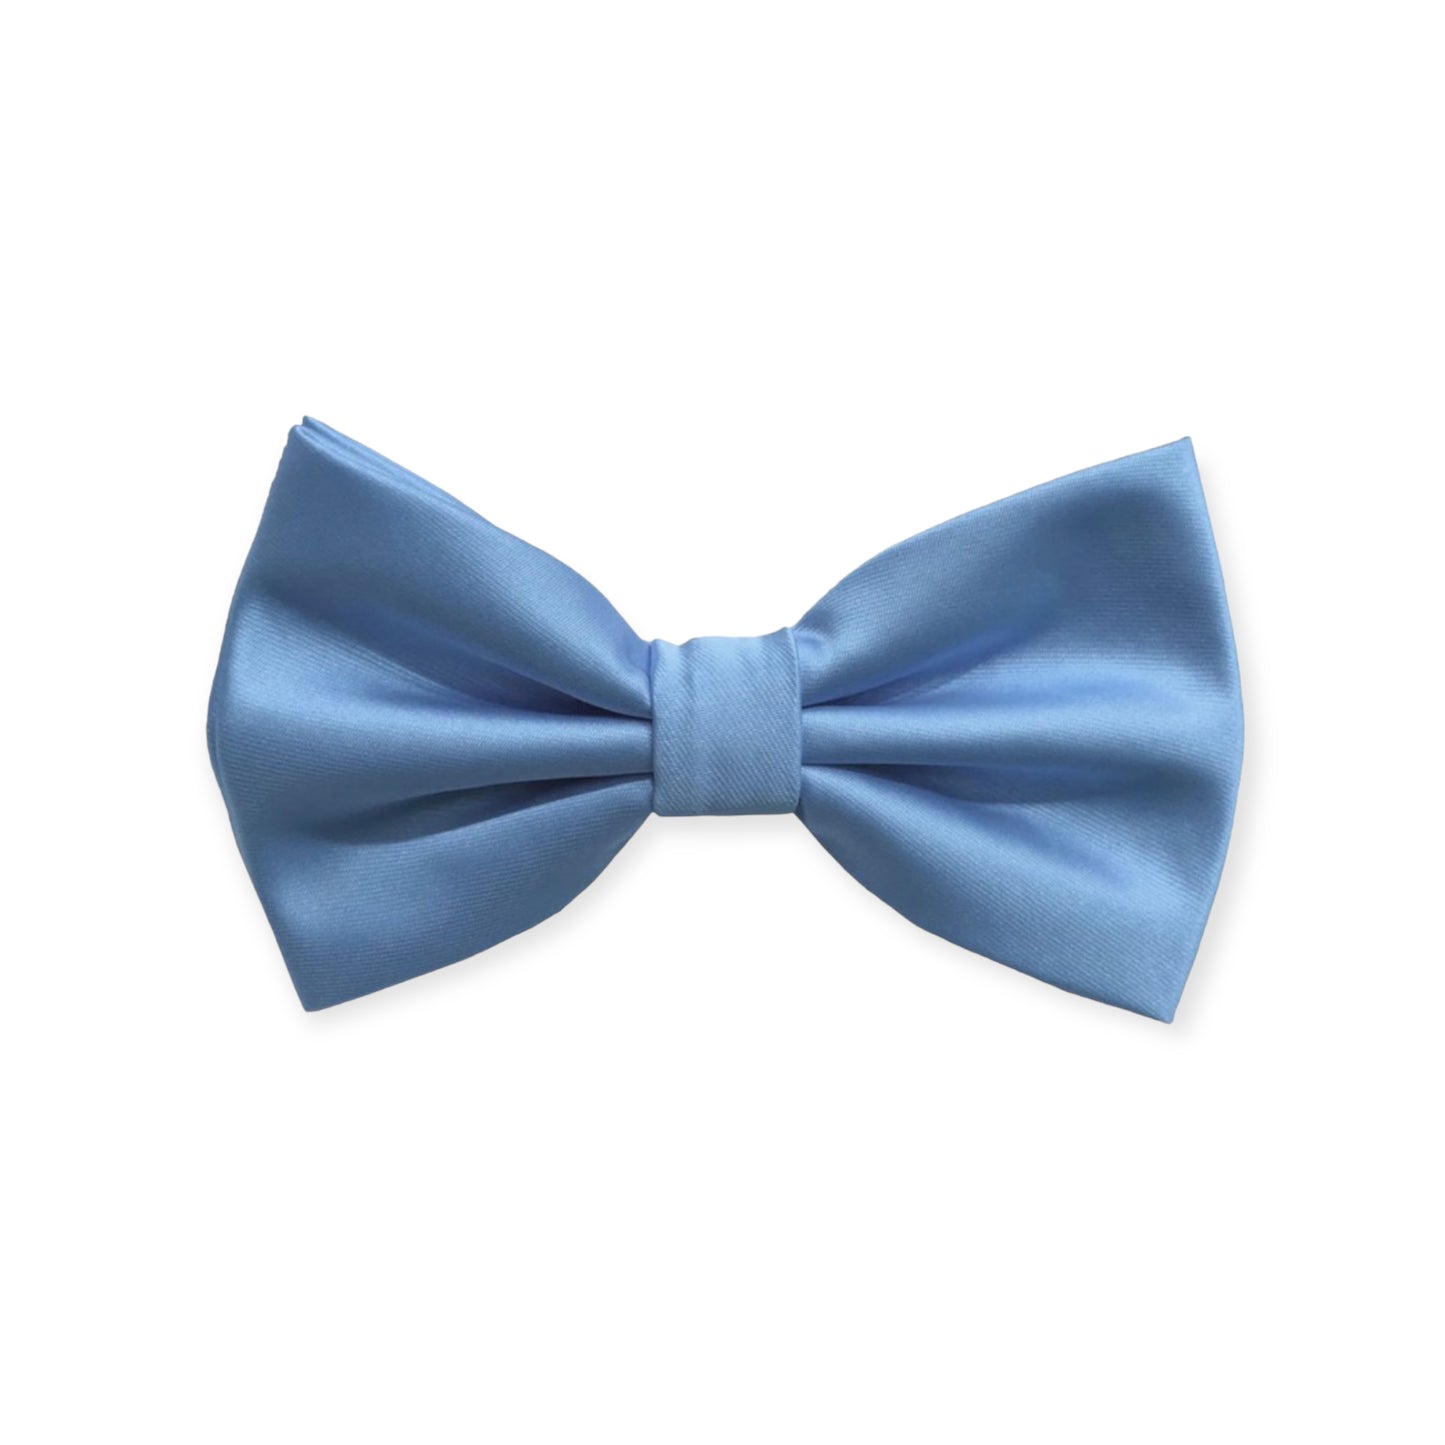 Solid Powder Blue Bow Tie